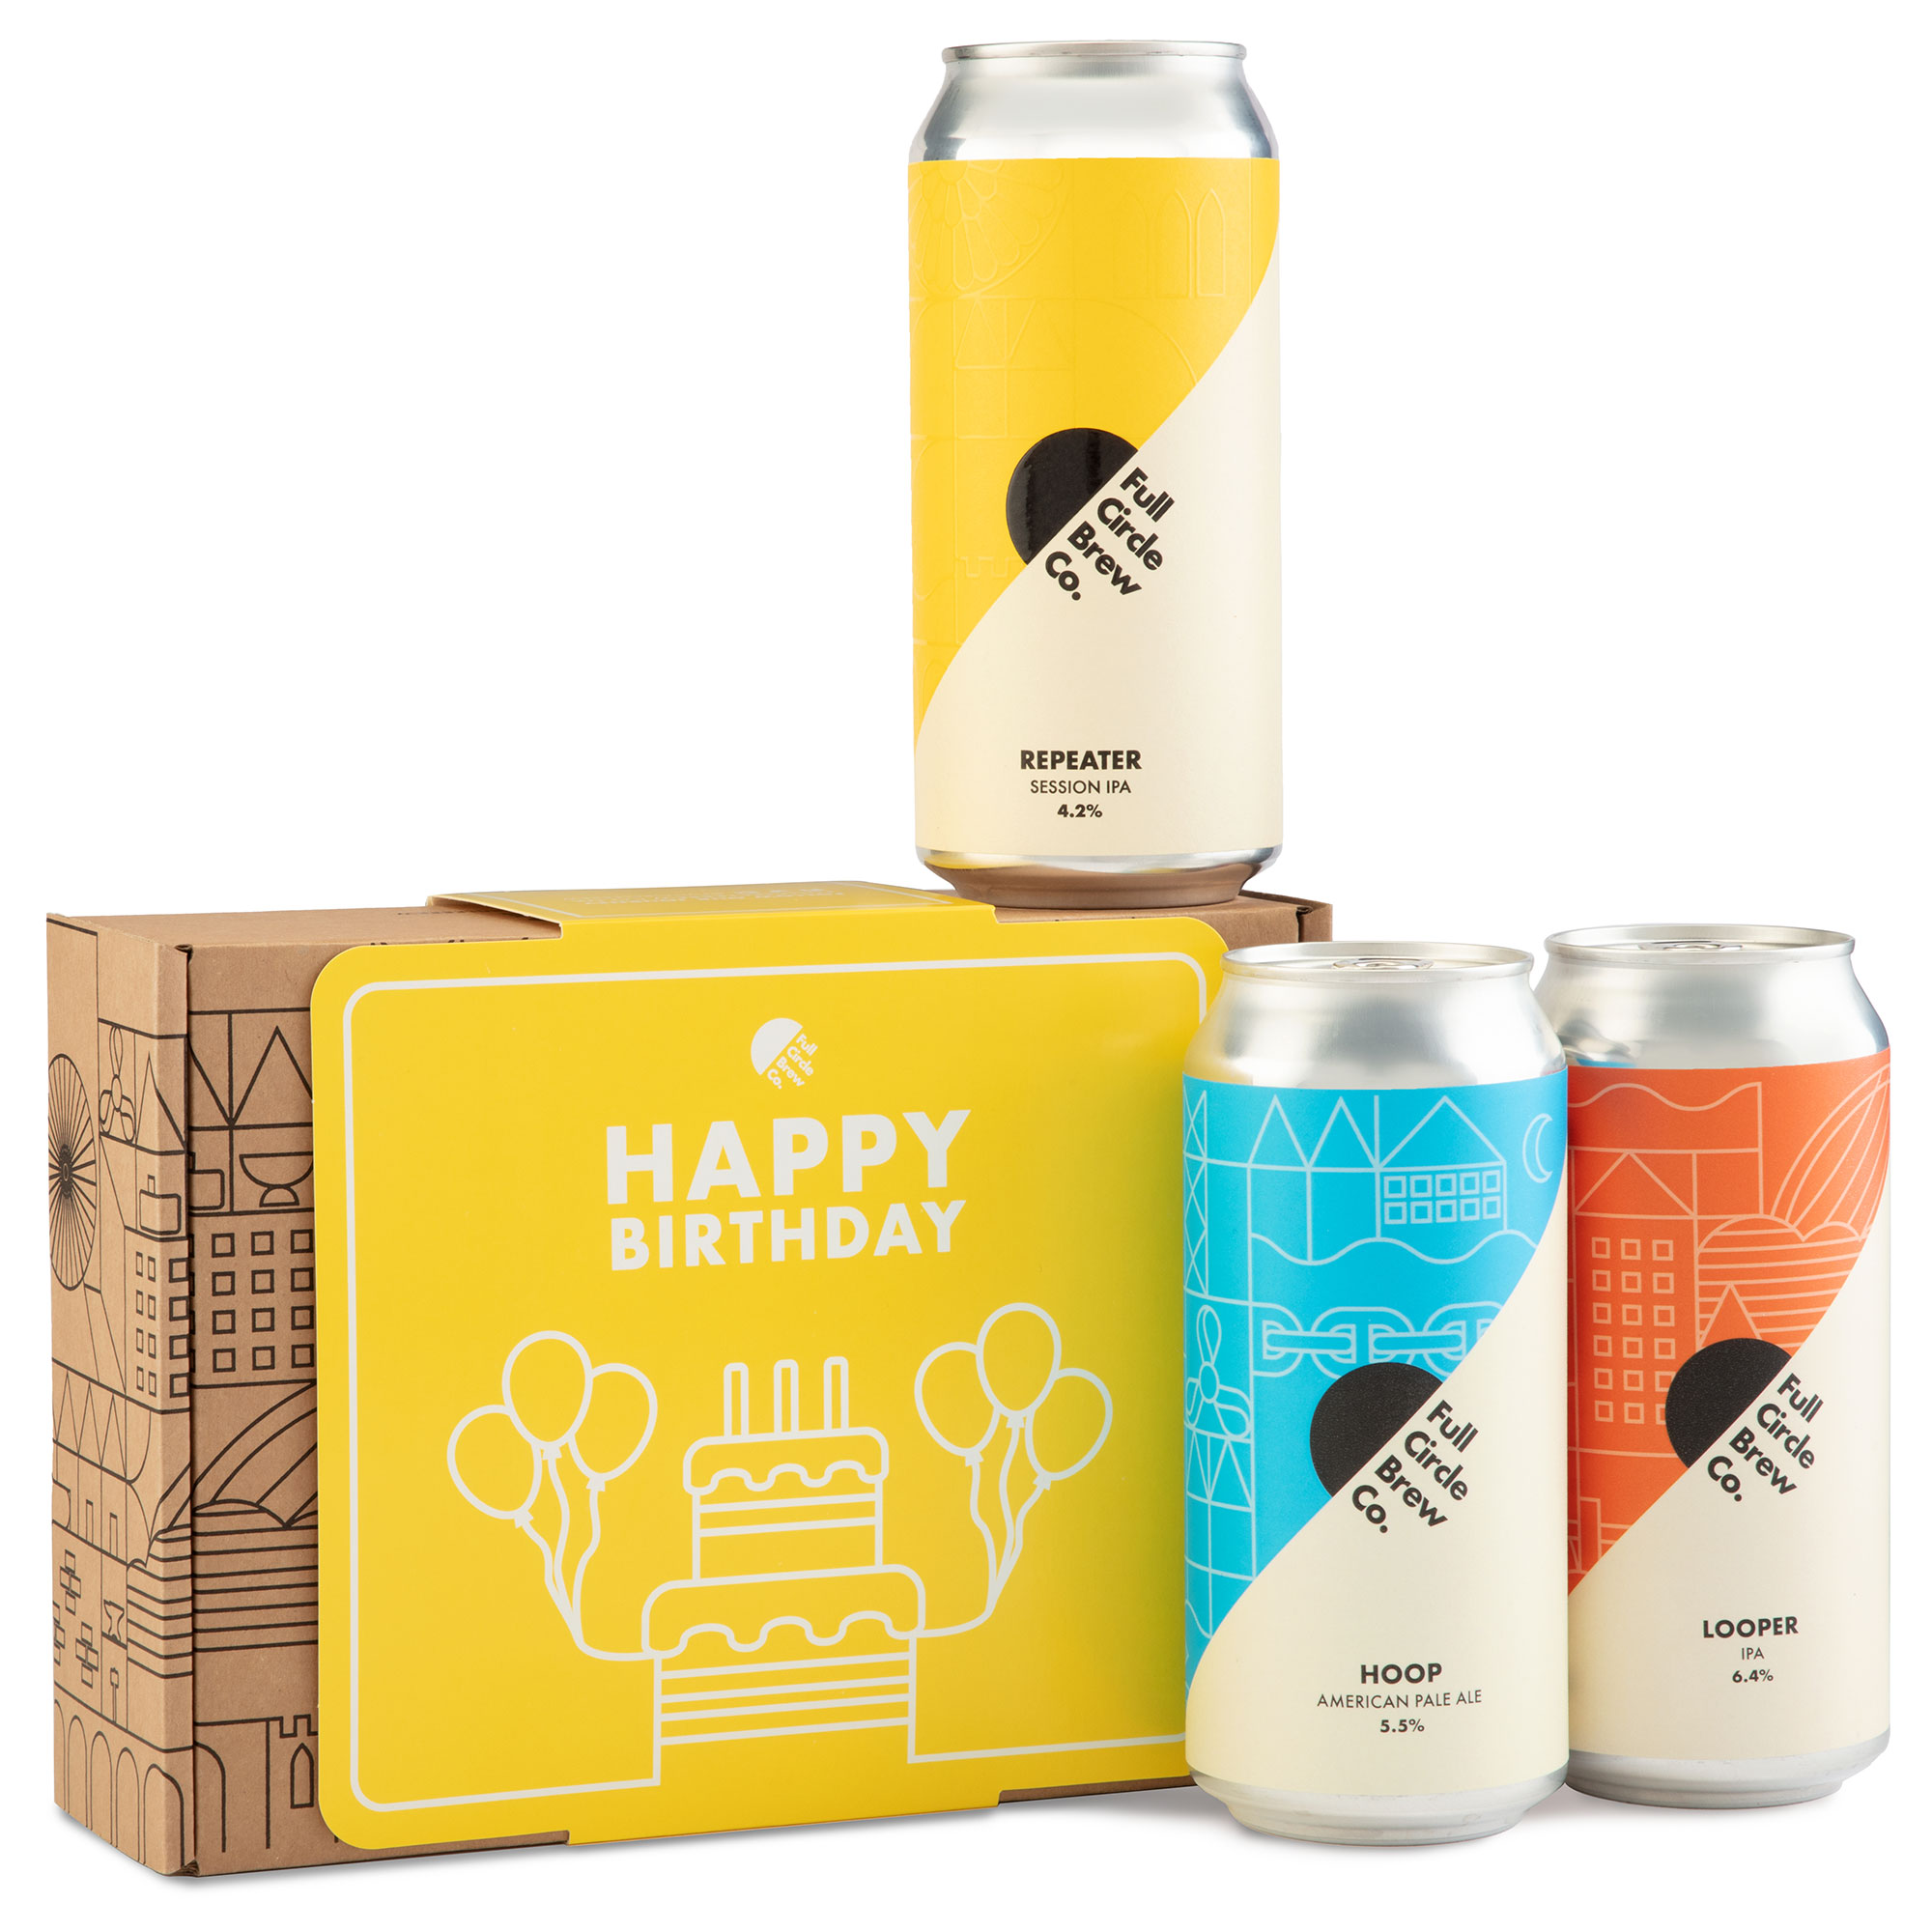 Full Circle Brew Co. Happy Birthday 3 Beer Gift Box